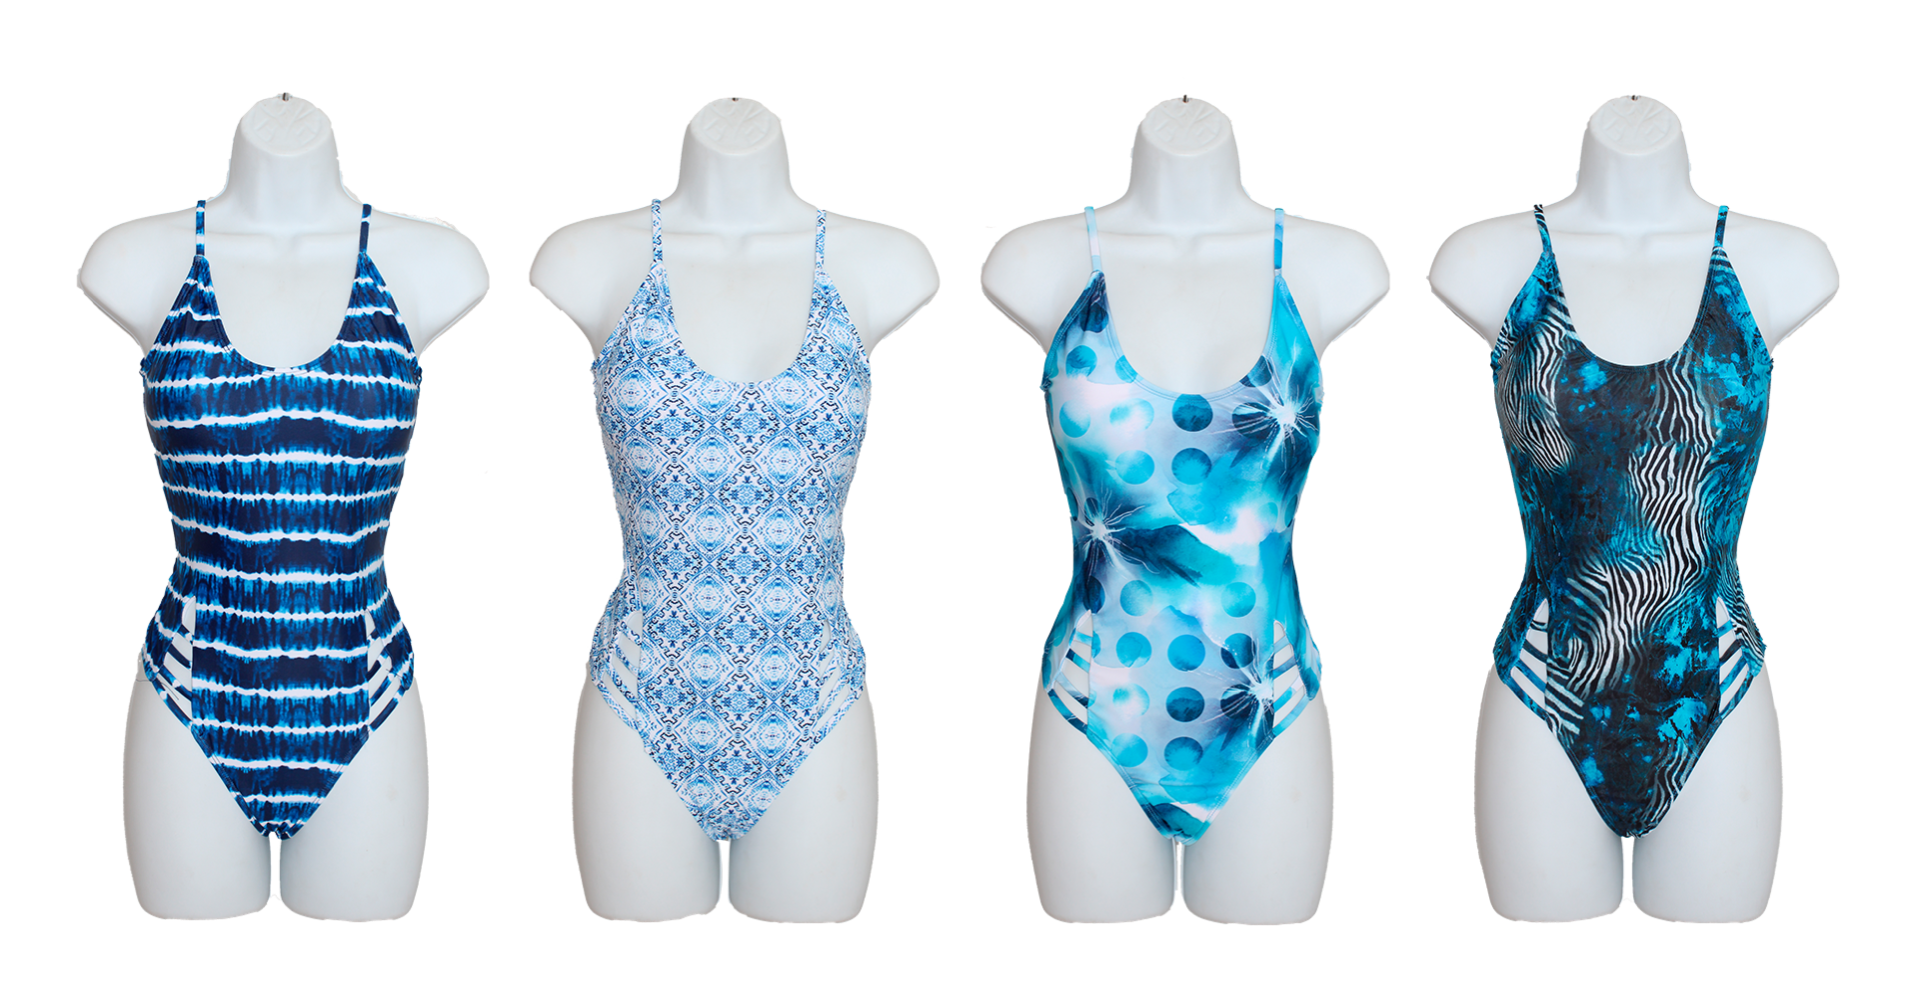 ''Women's Junior Fashion Aqua Blue One-Piece Swimsuits - Tie-Dye, Zebra, & Polka Dot Print - Sizes Sm